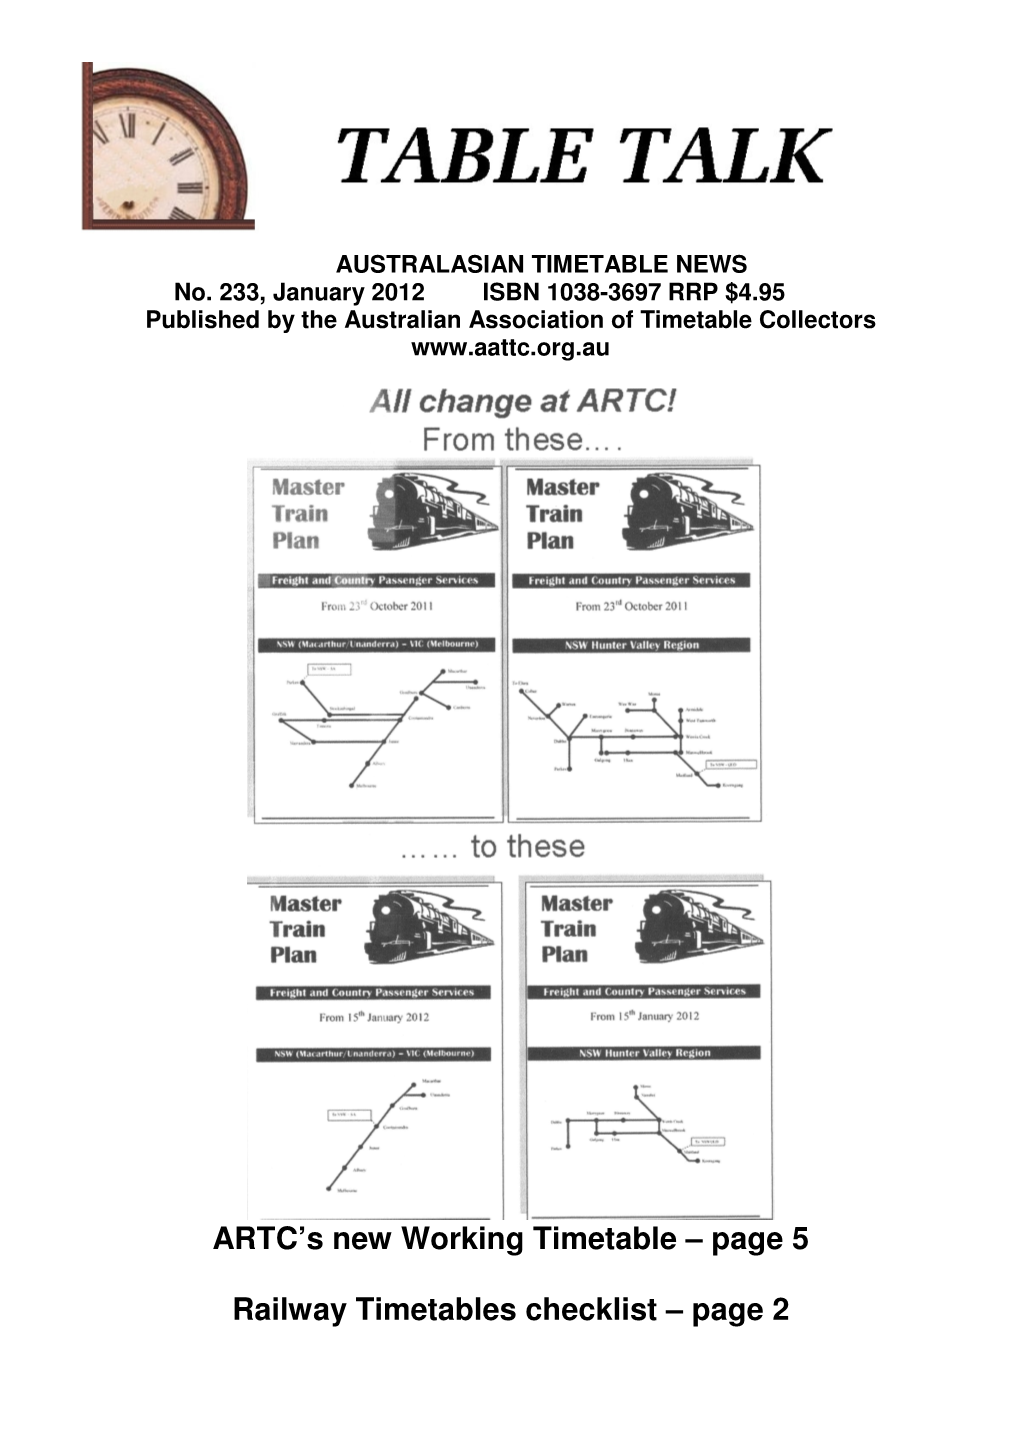 ARTC's New Working Timetable